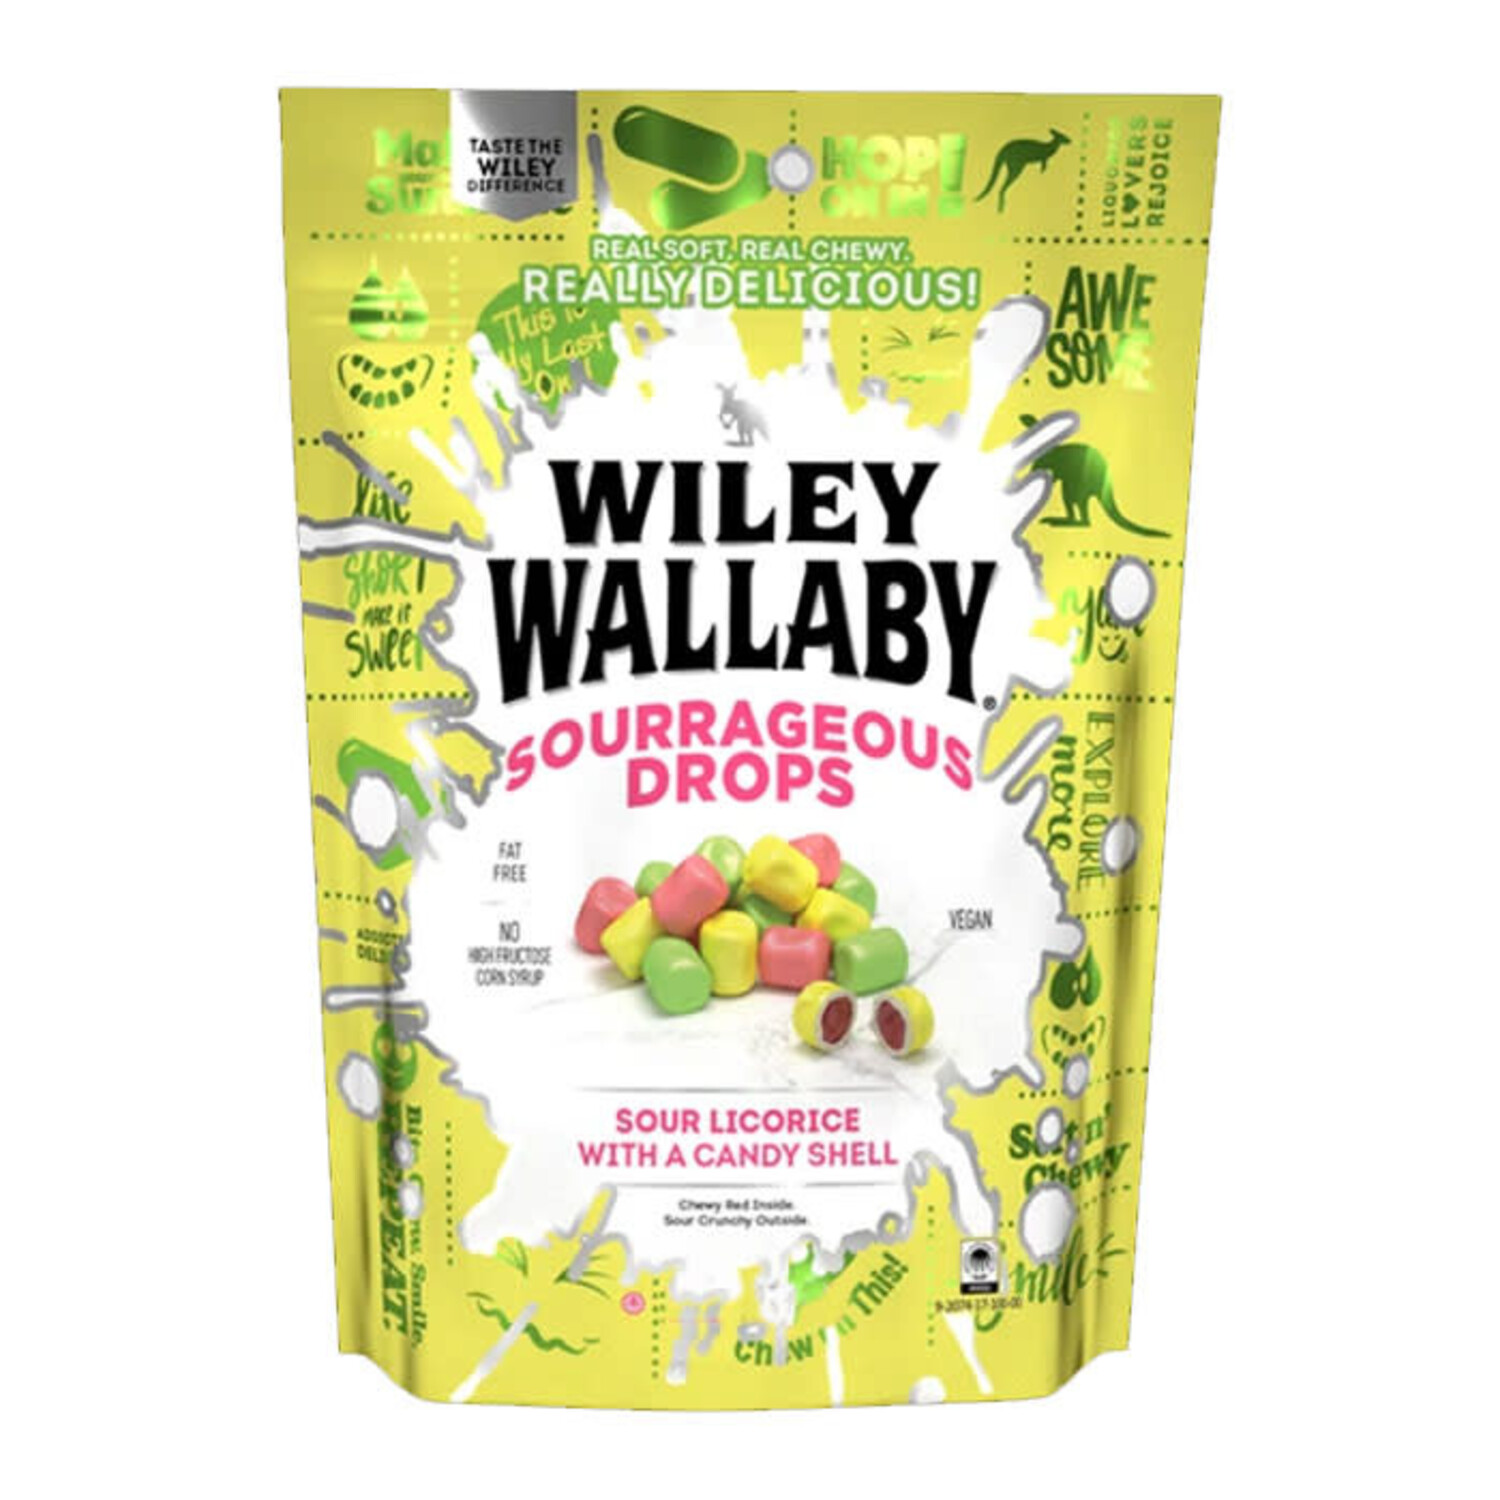 Wiley Wallaby Sourrageous Drops Licorice 6oz Bags - Grandpa Joe's Candy Shop